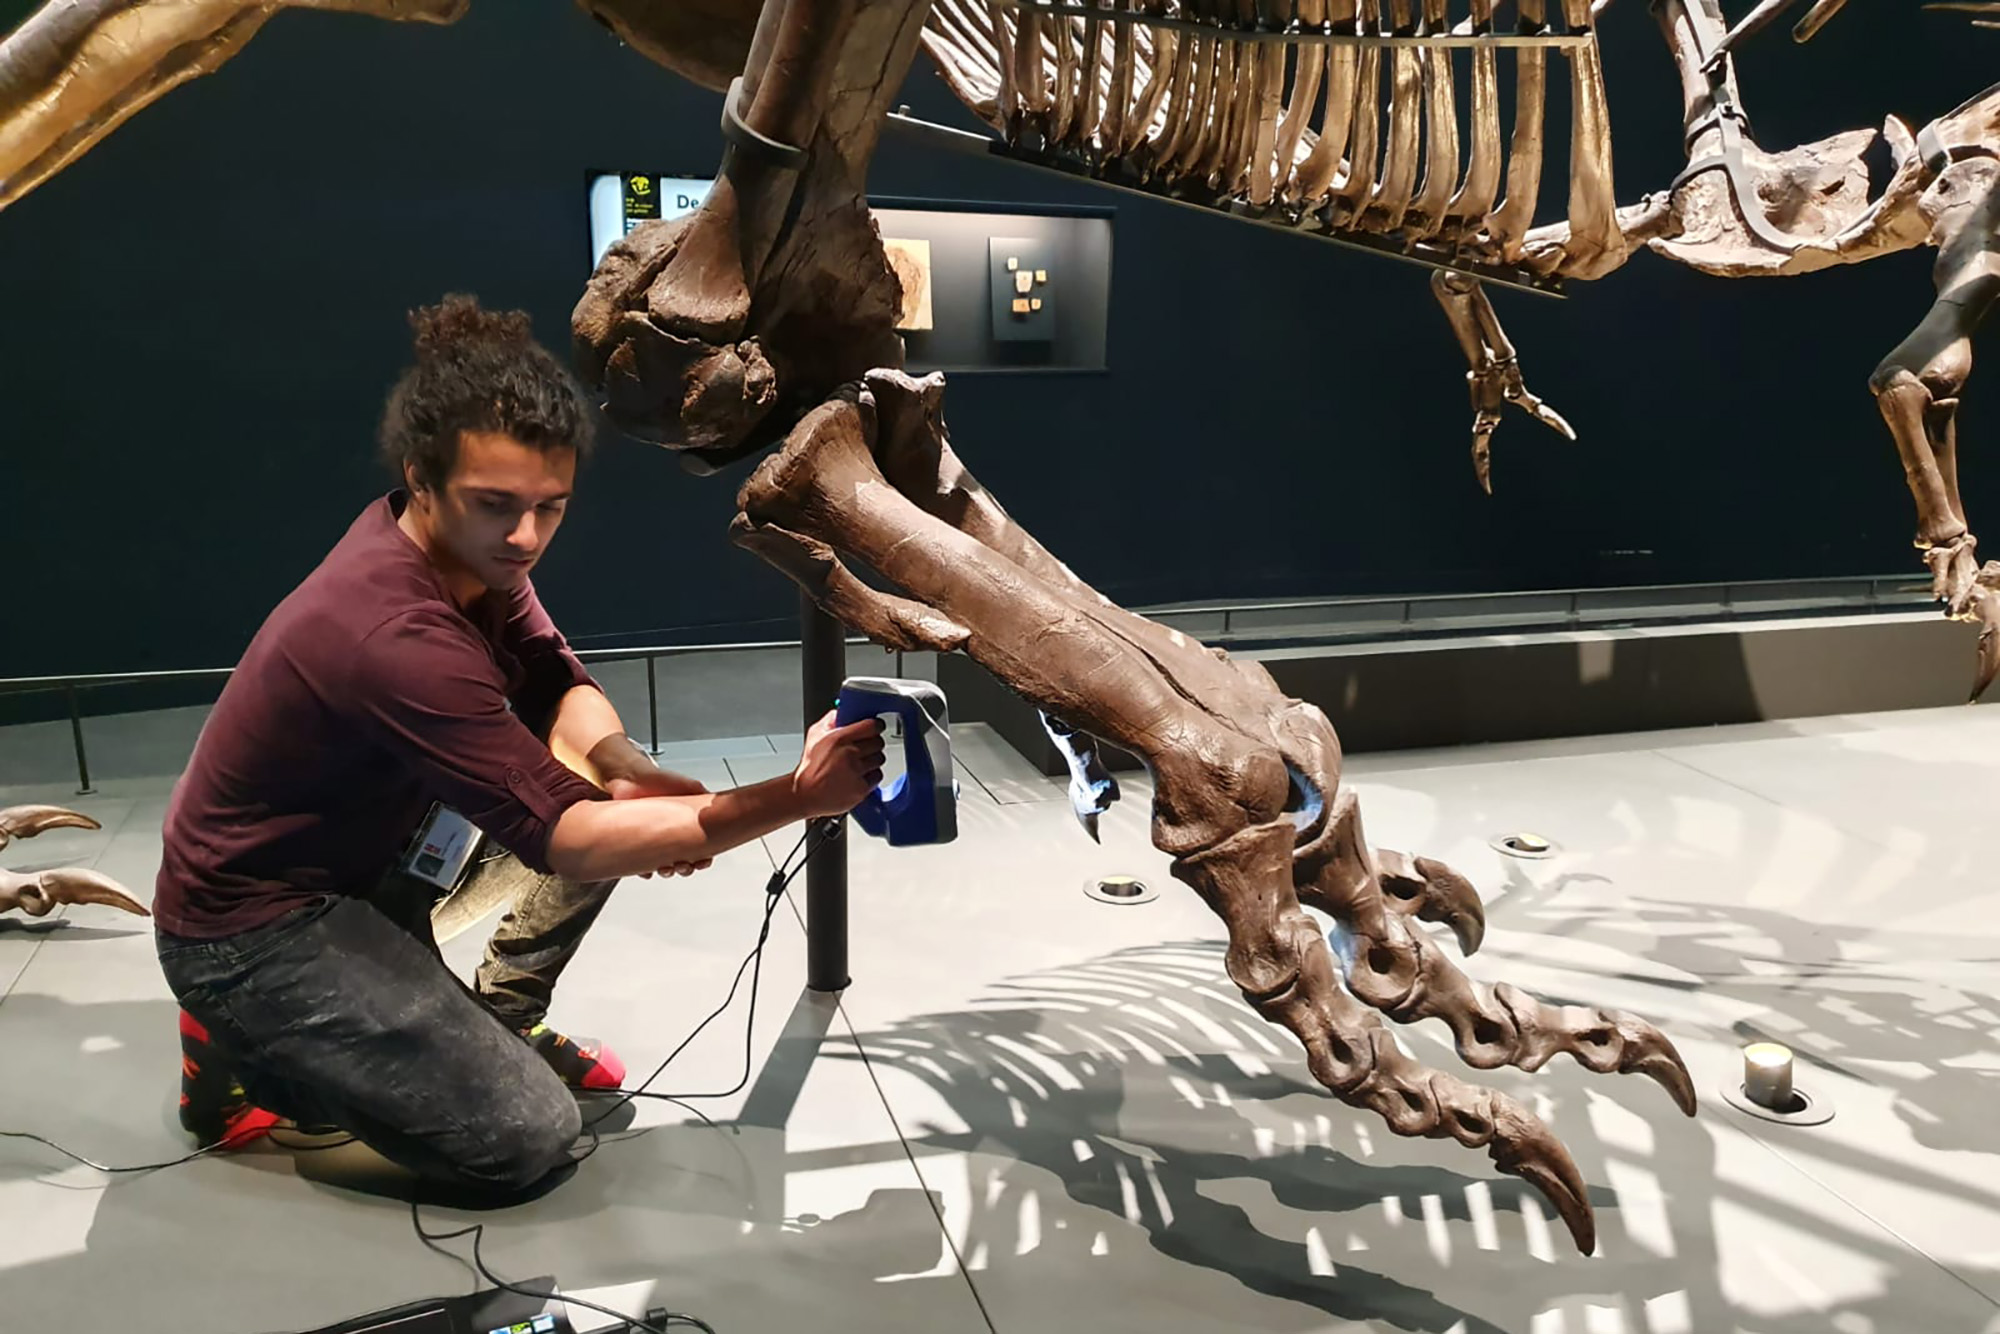 3D Printing a Full-Size Tyrannosaurus Rex Skeleton